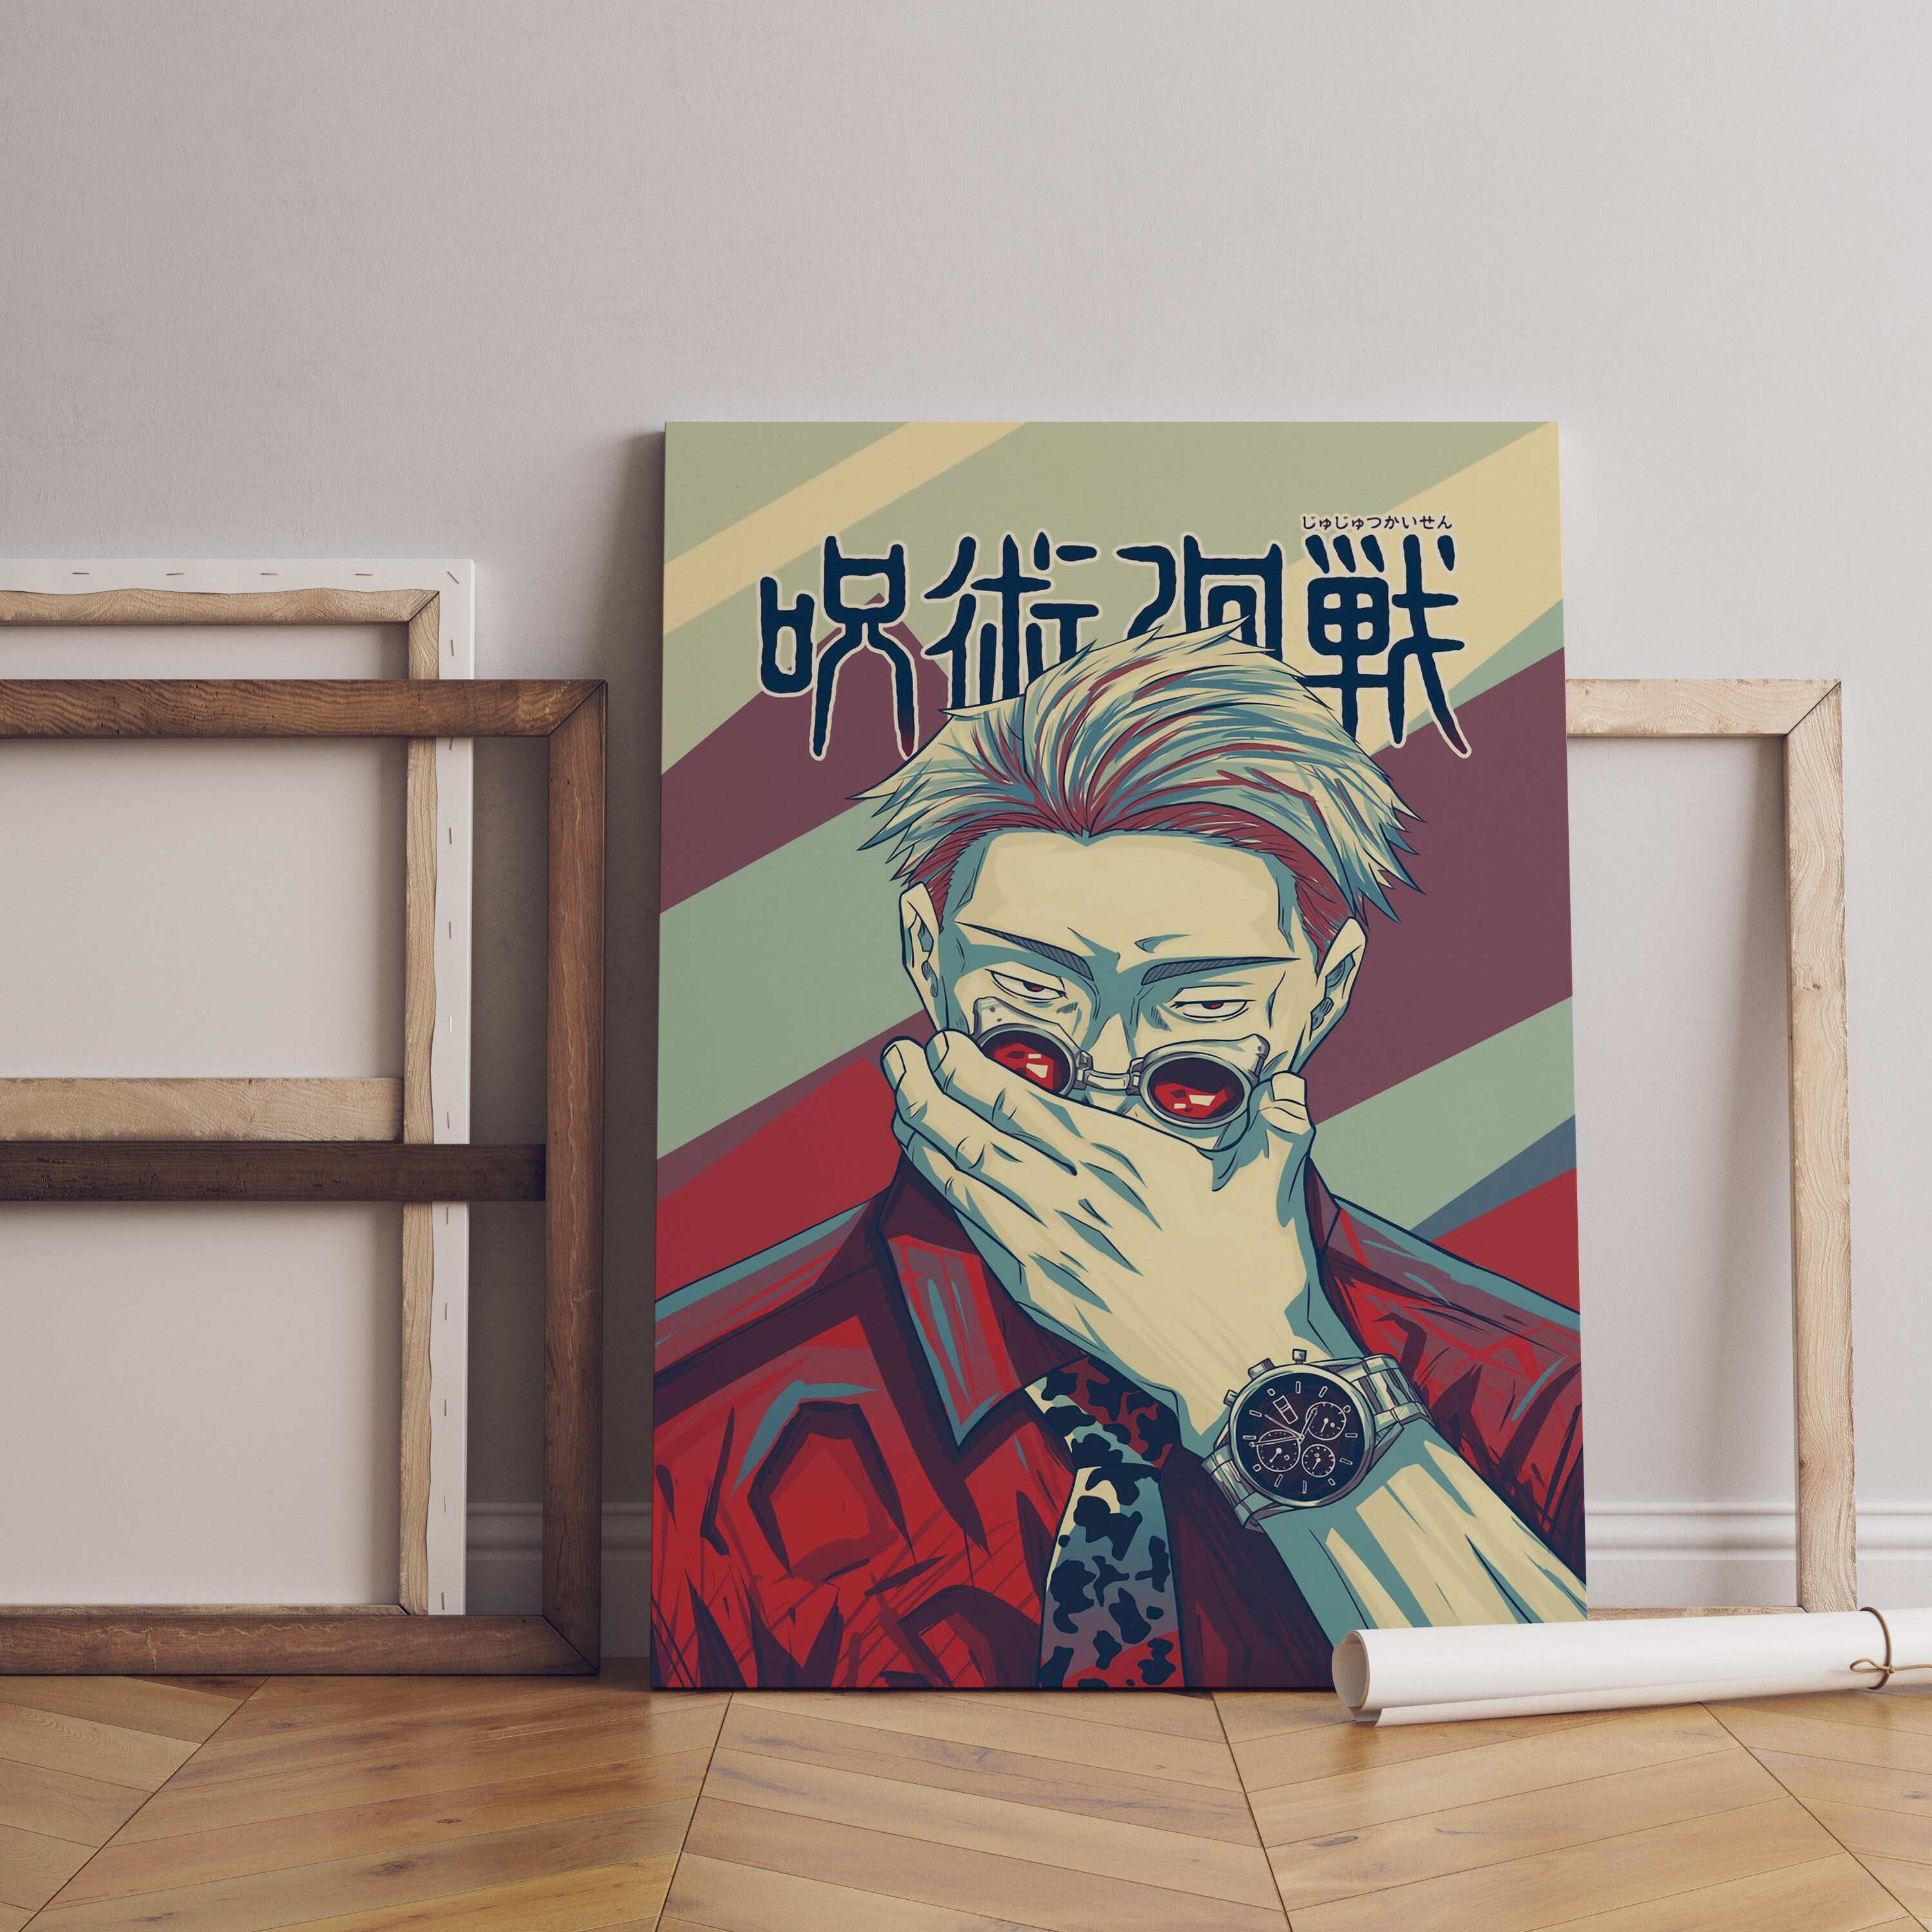 kimi wa kanata Art Board Print for Sale by johnngobosart